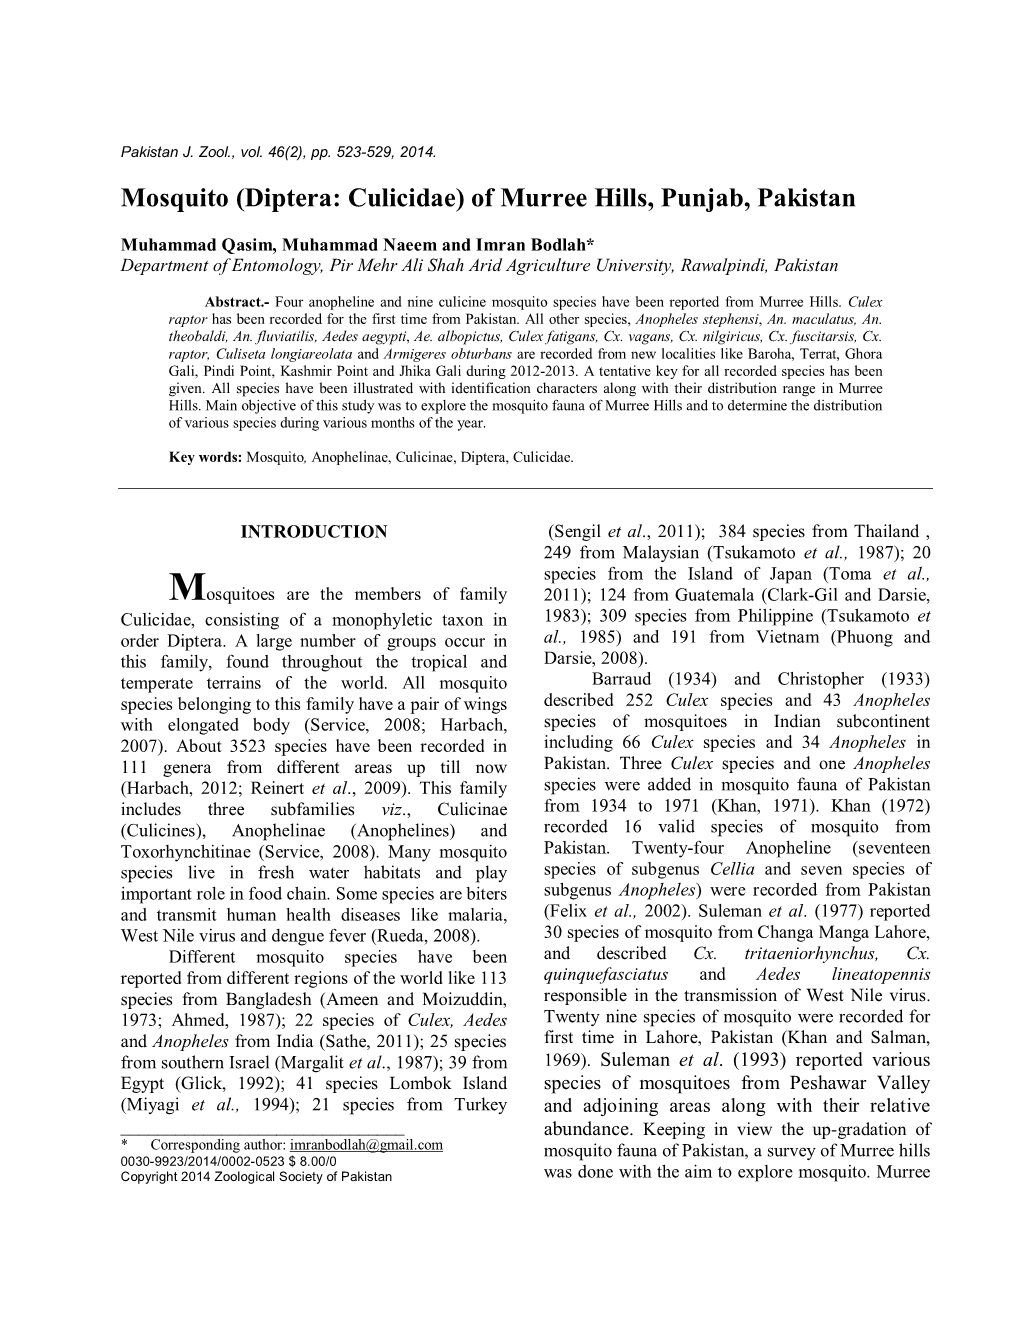 Mosquito (Diptera: Culicidae) of Murree Hills, Punjab, Pakistan